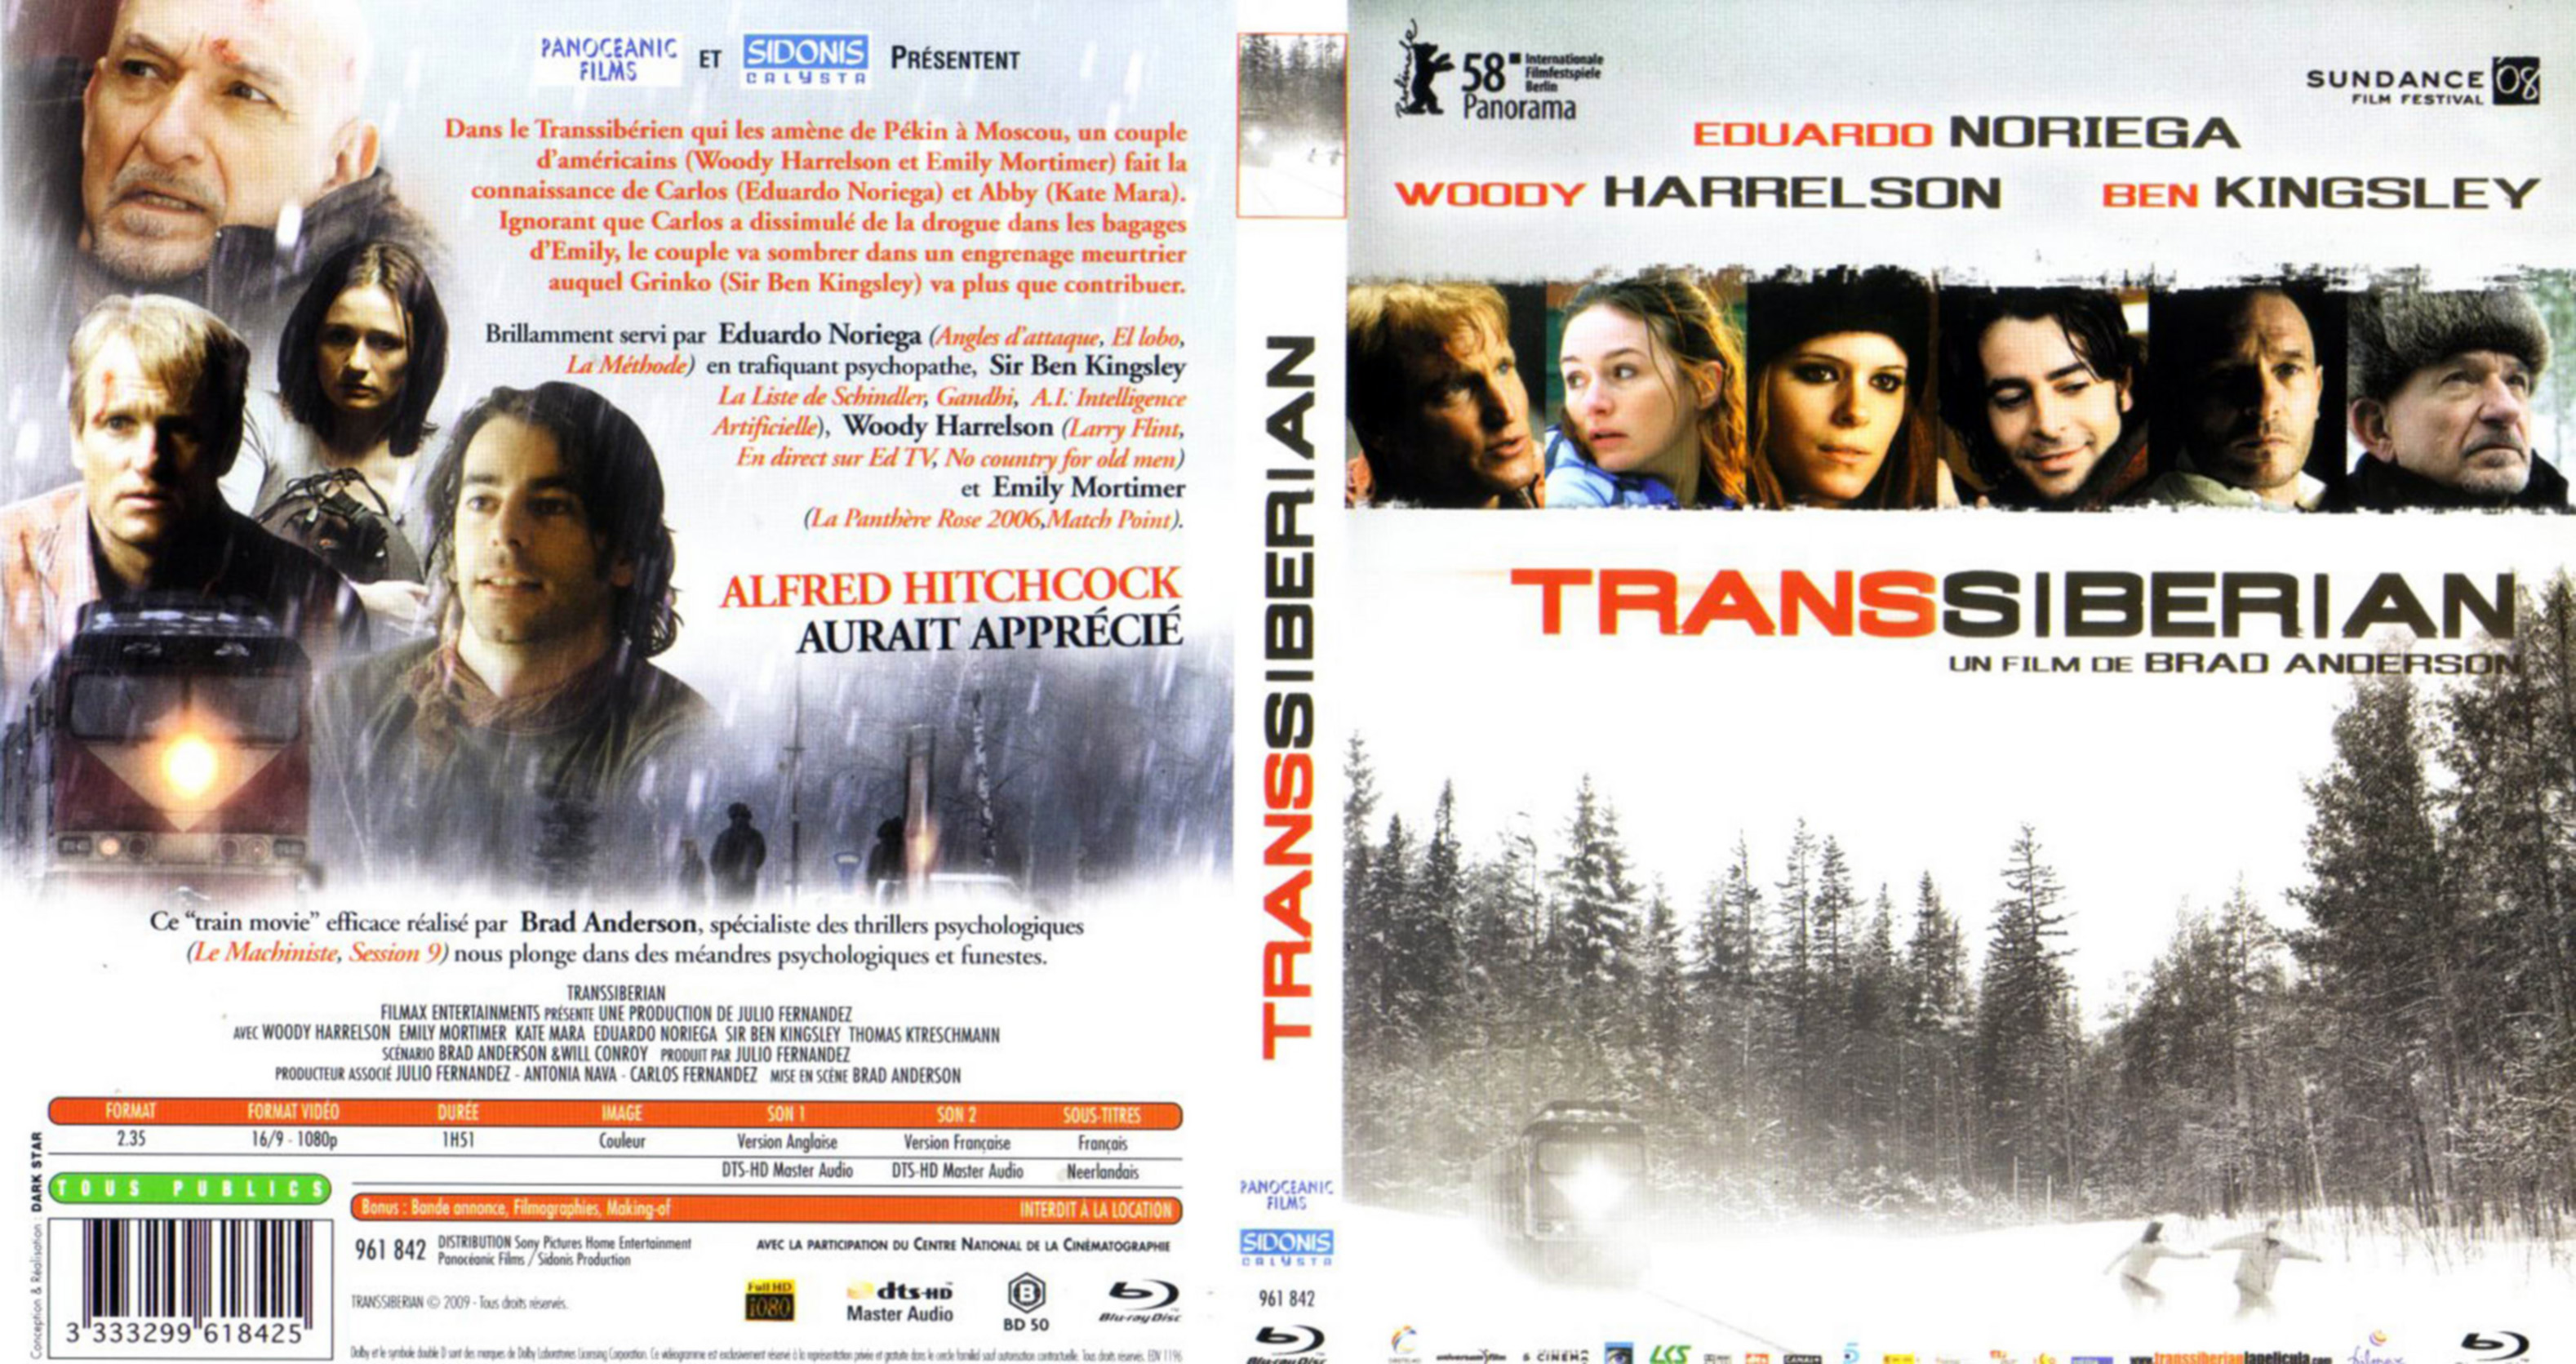 Jaquette DVD Transsiberian (BLU-RAY)